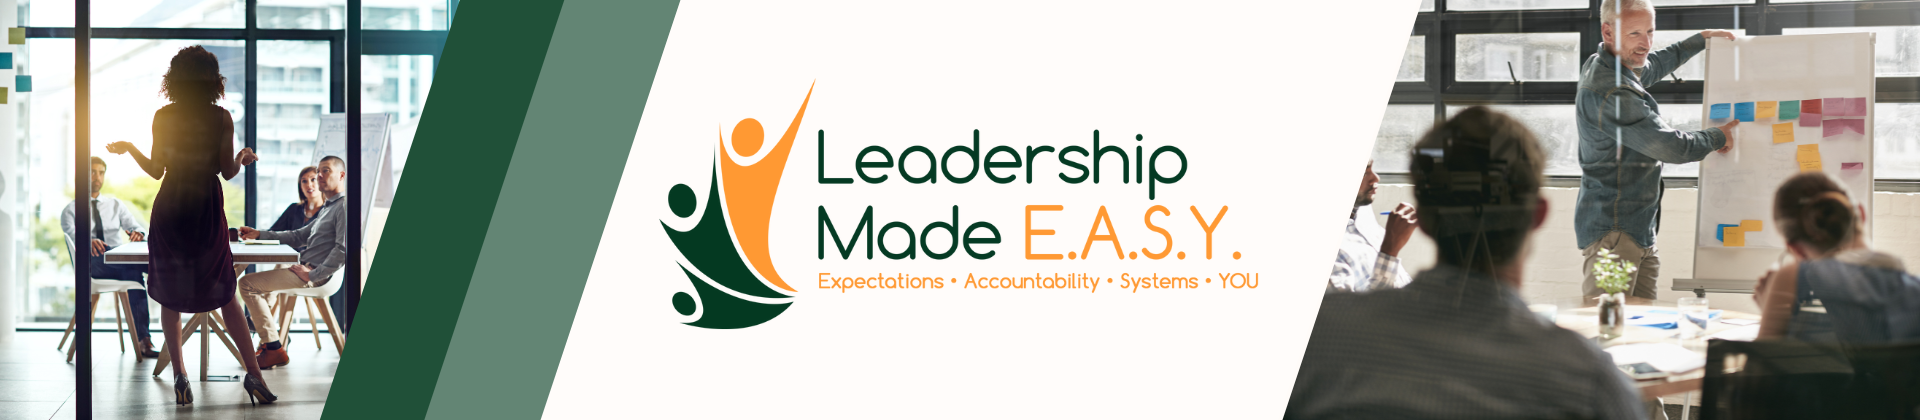 Leadership Made E.A.S.Y.